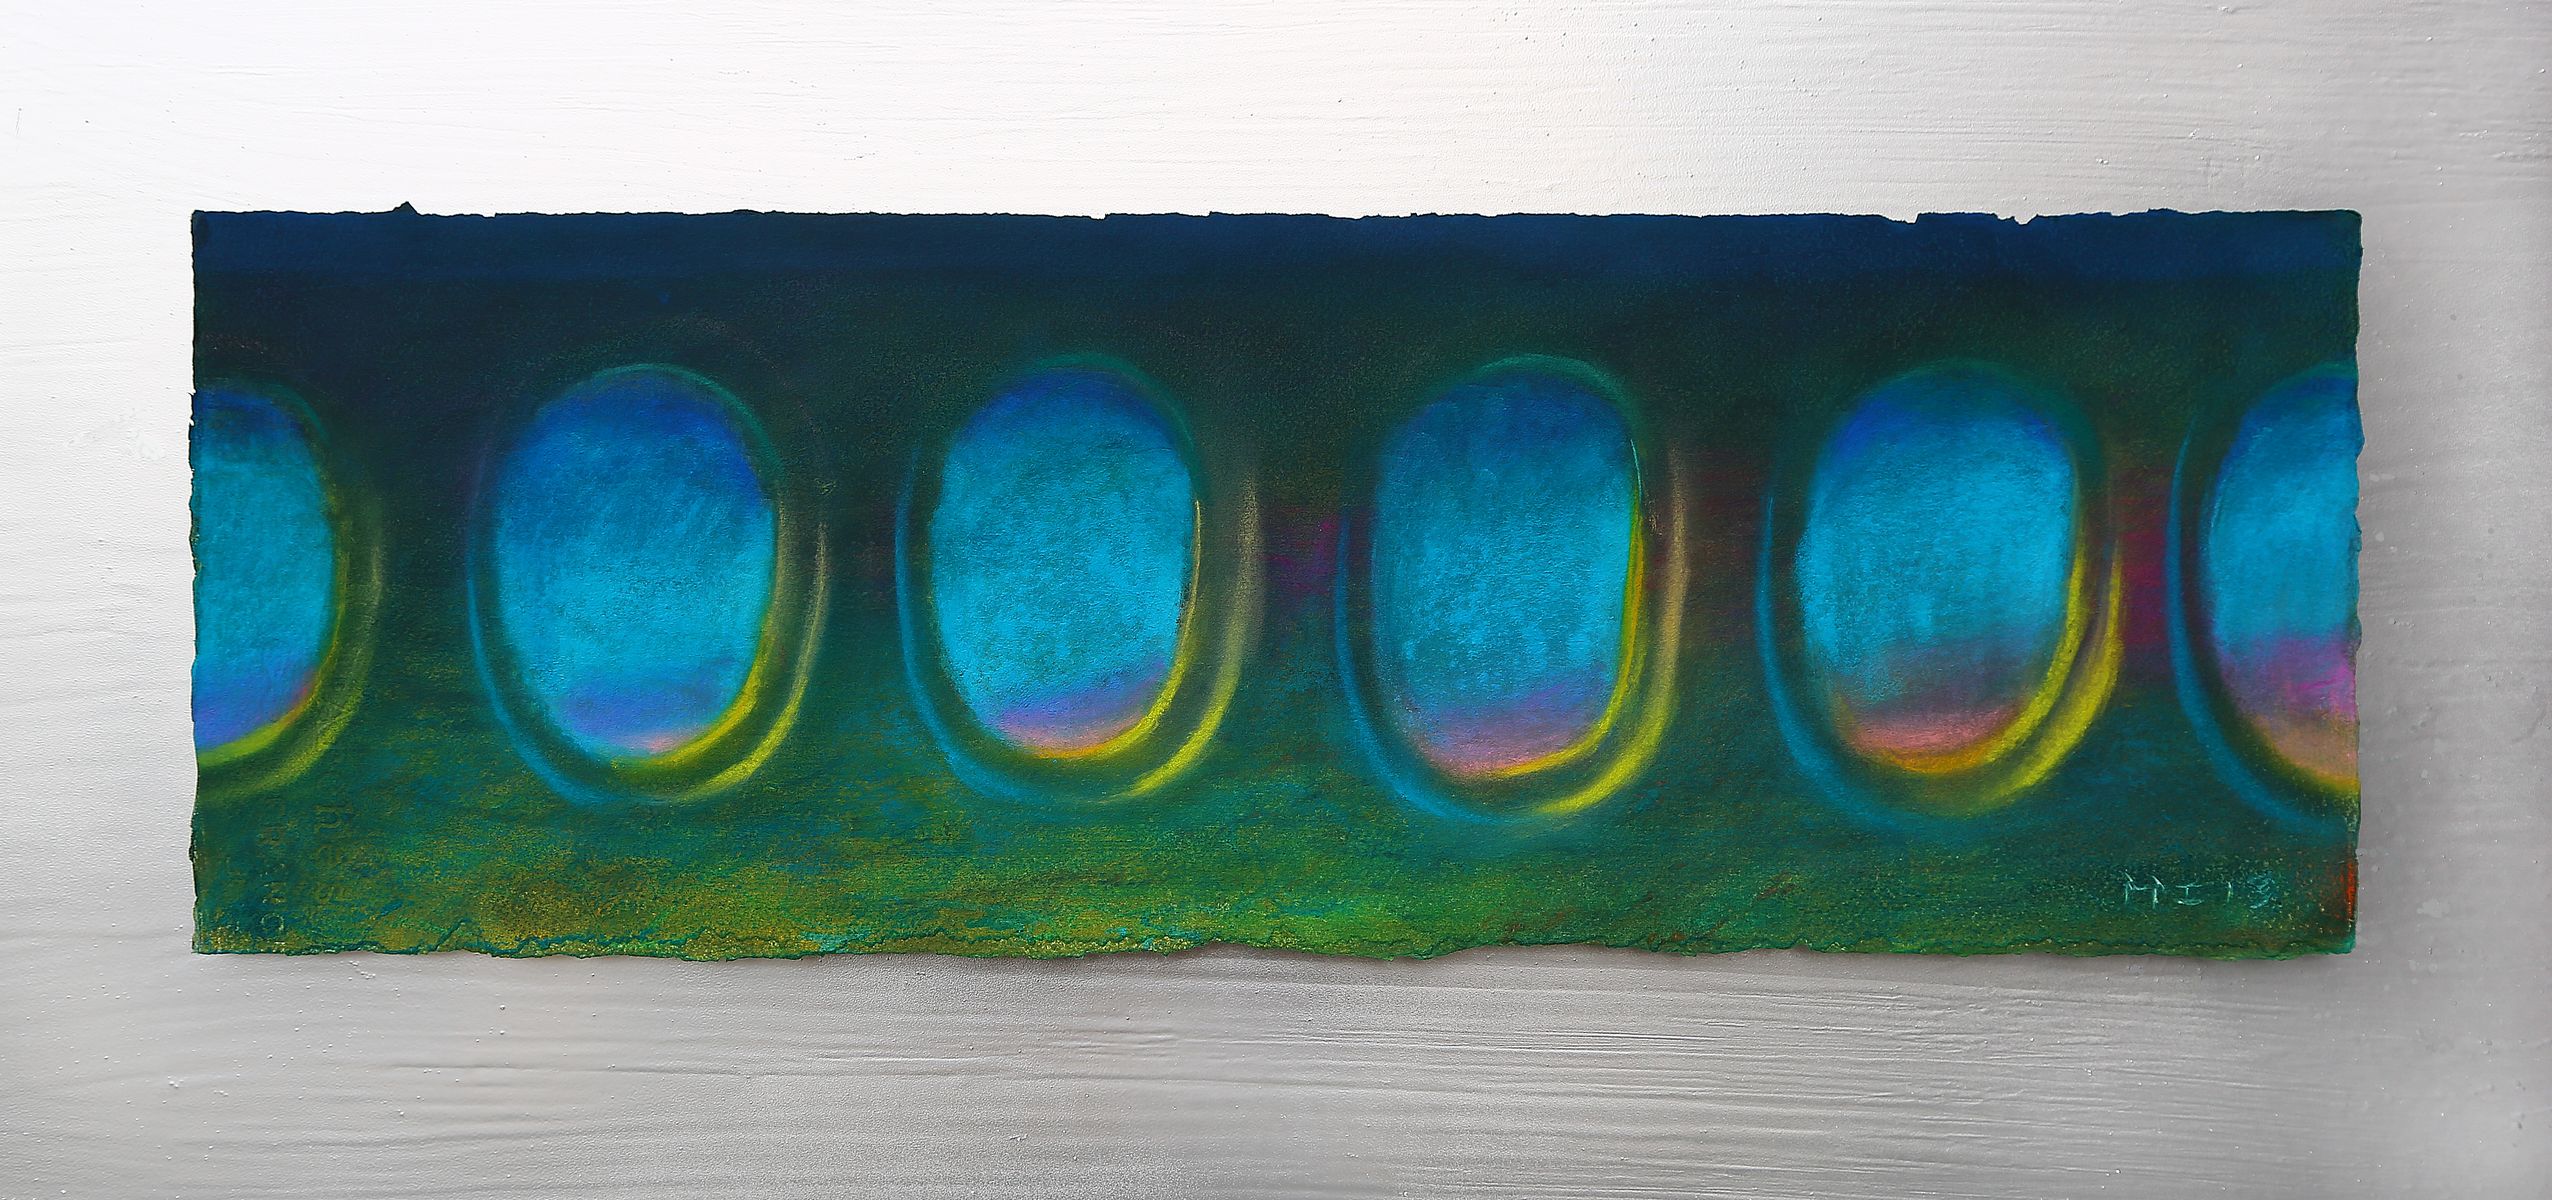 何工，窗，纸上色粉，19×56cm，2013 
He Gong, The Windows, Toner on Paper, 19×56cm, 2013